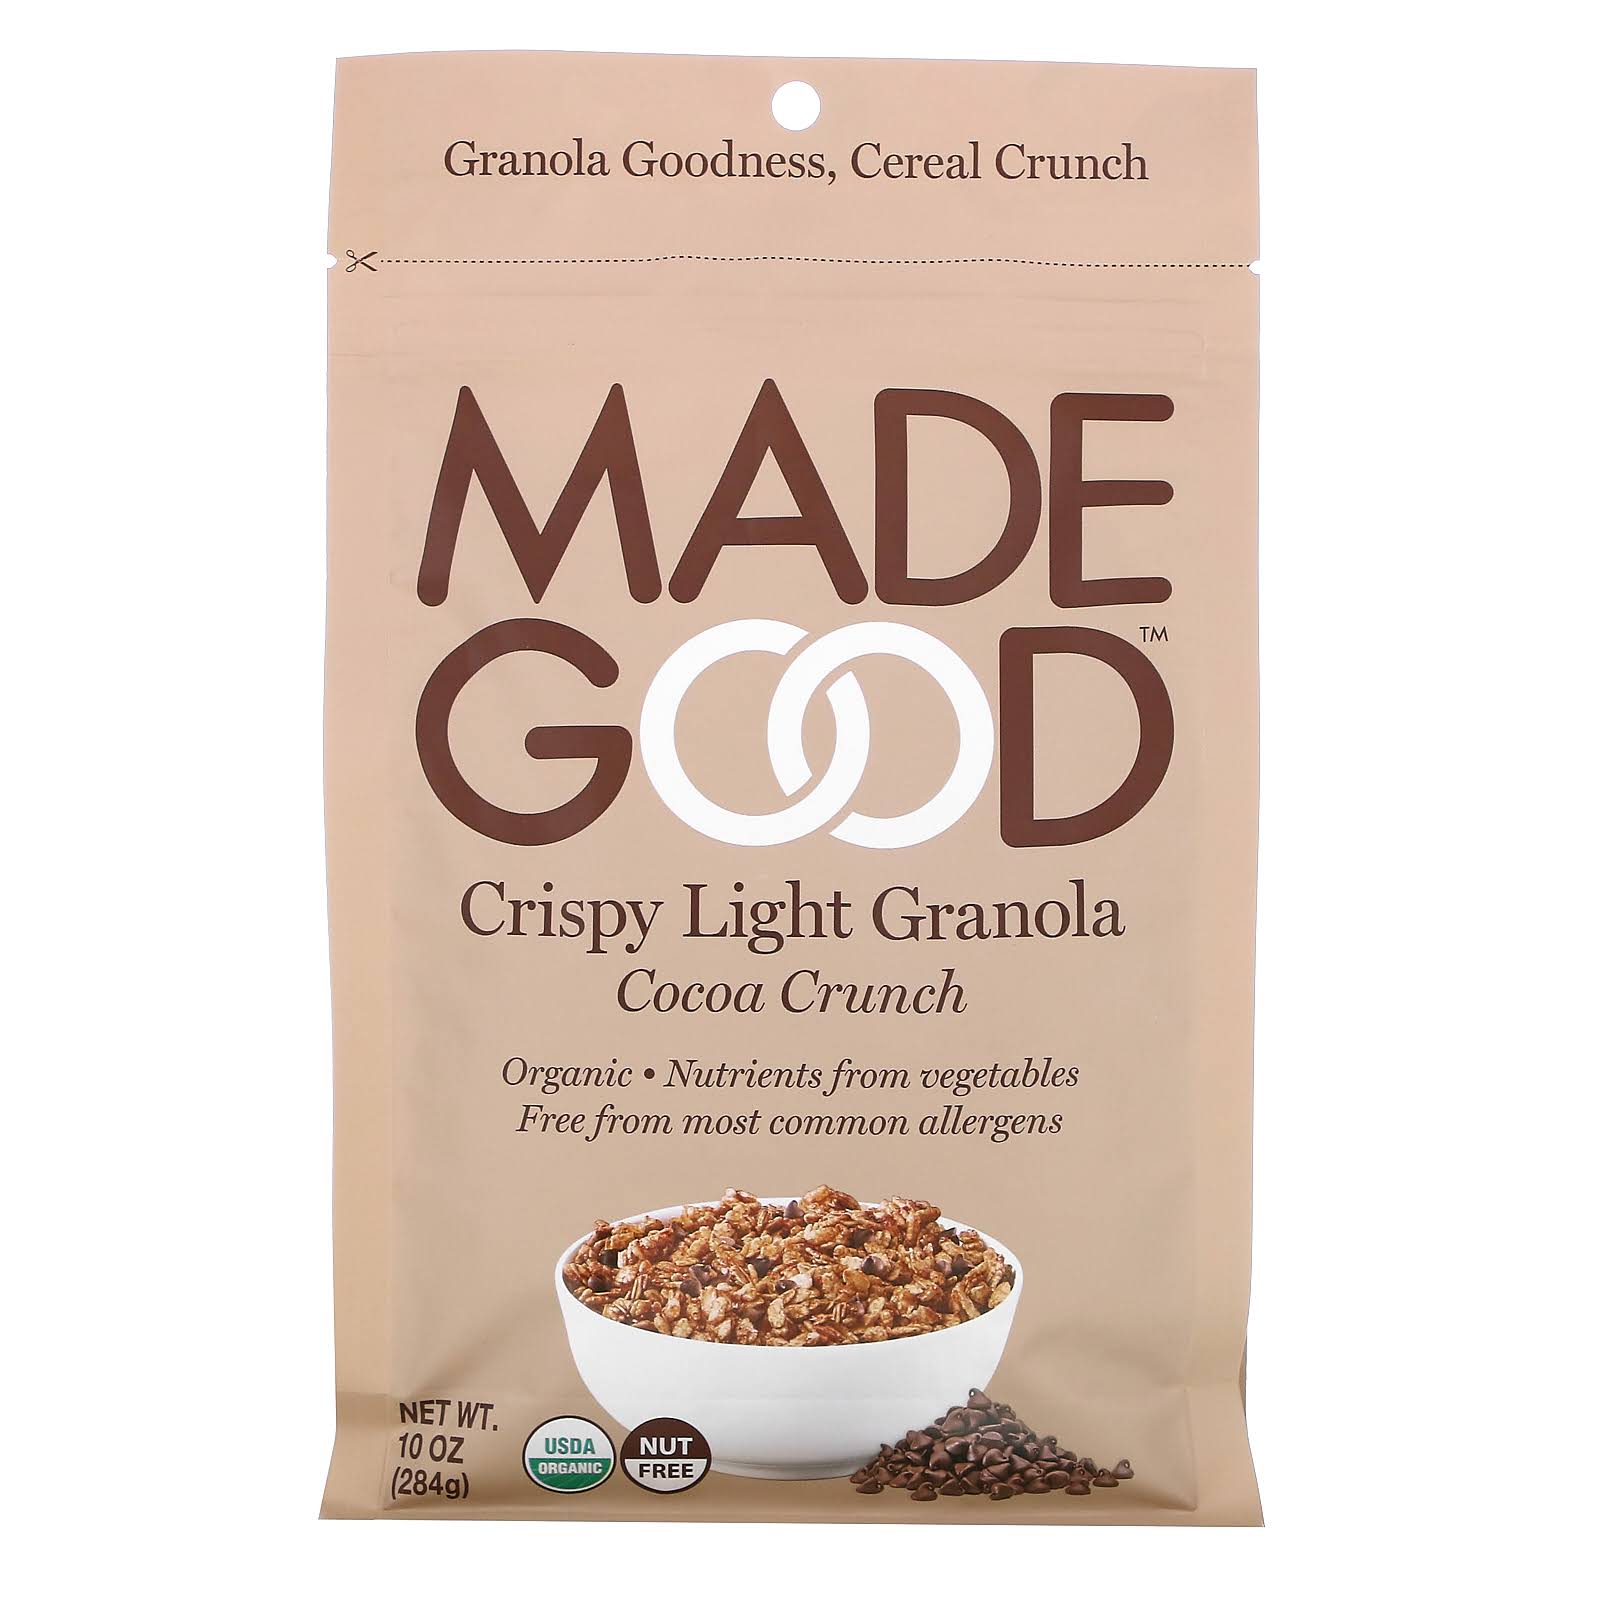 Madegood: Crispy Light Granola Cocoa Crunch, 10 oz